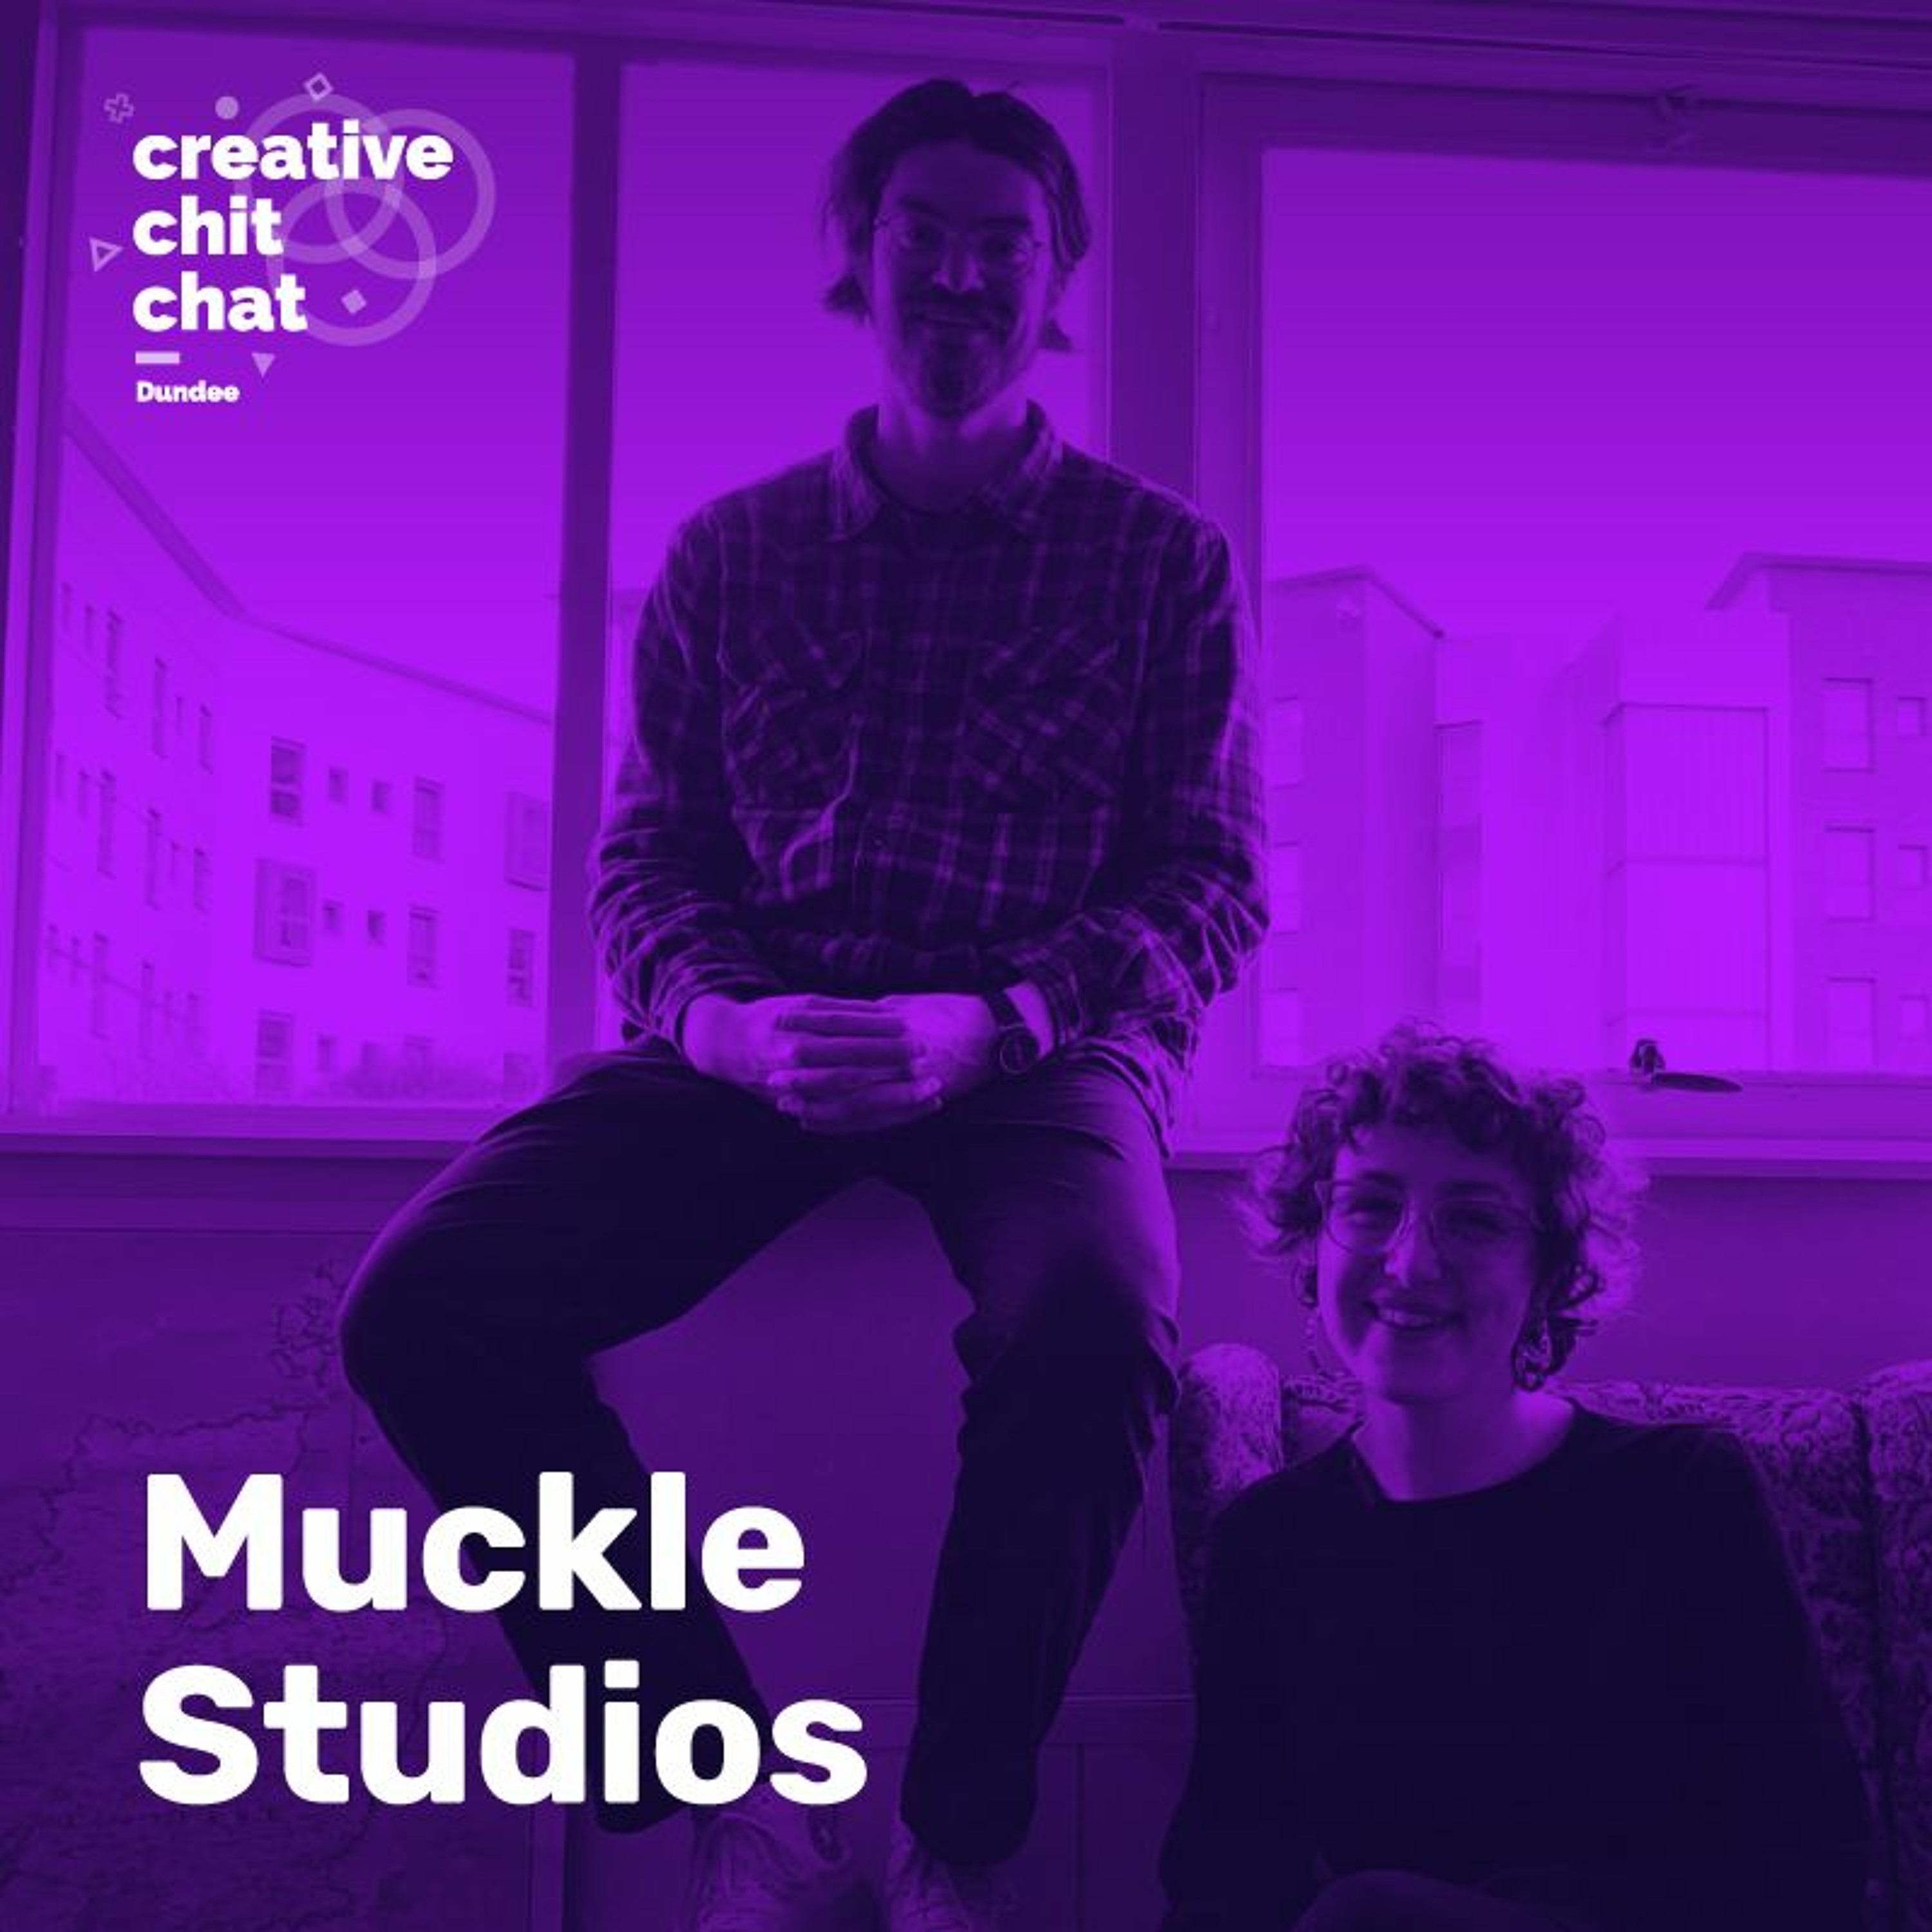 Muckle Studios - When a psychologist met a designer